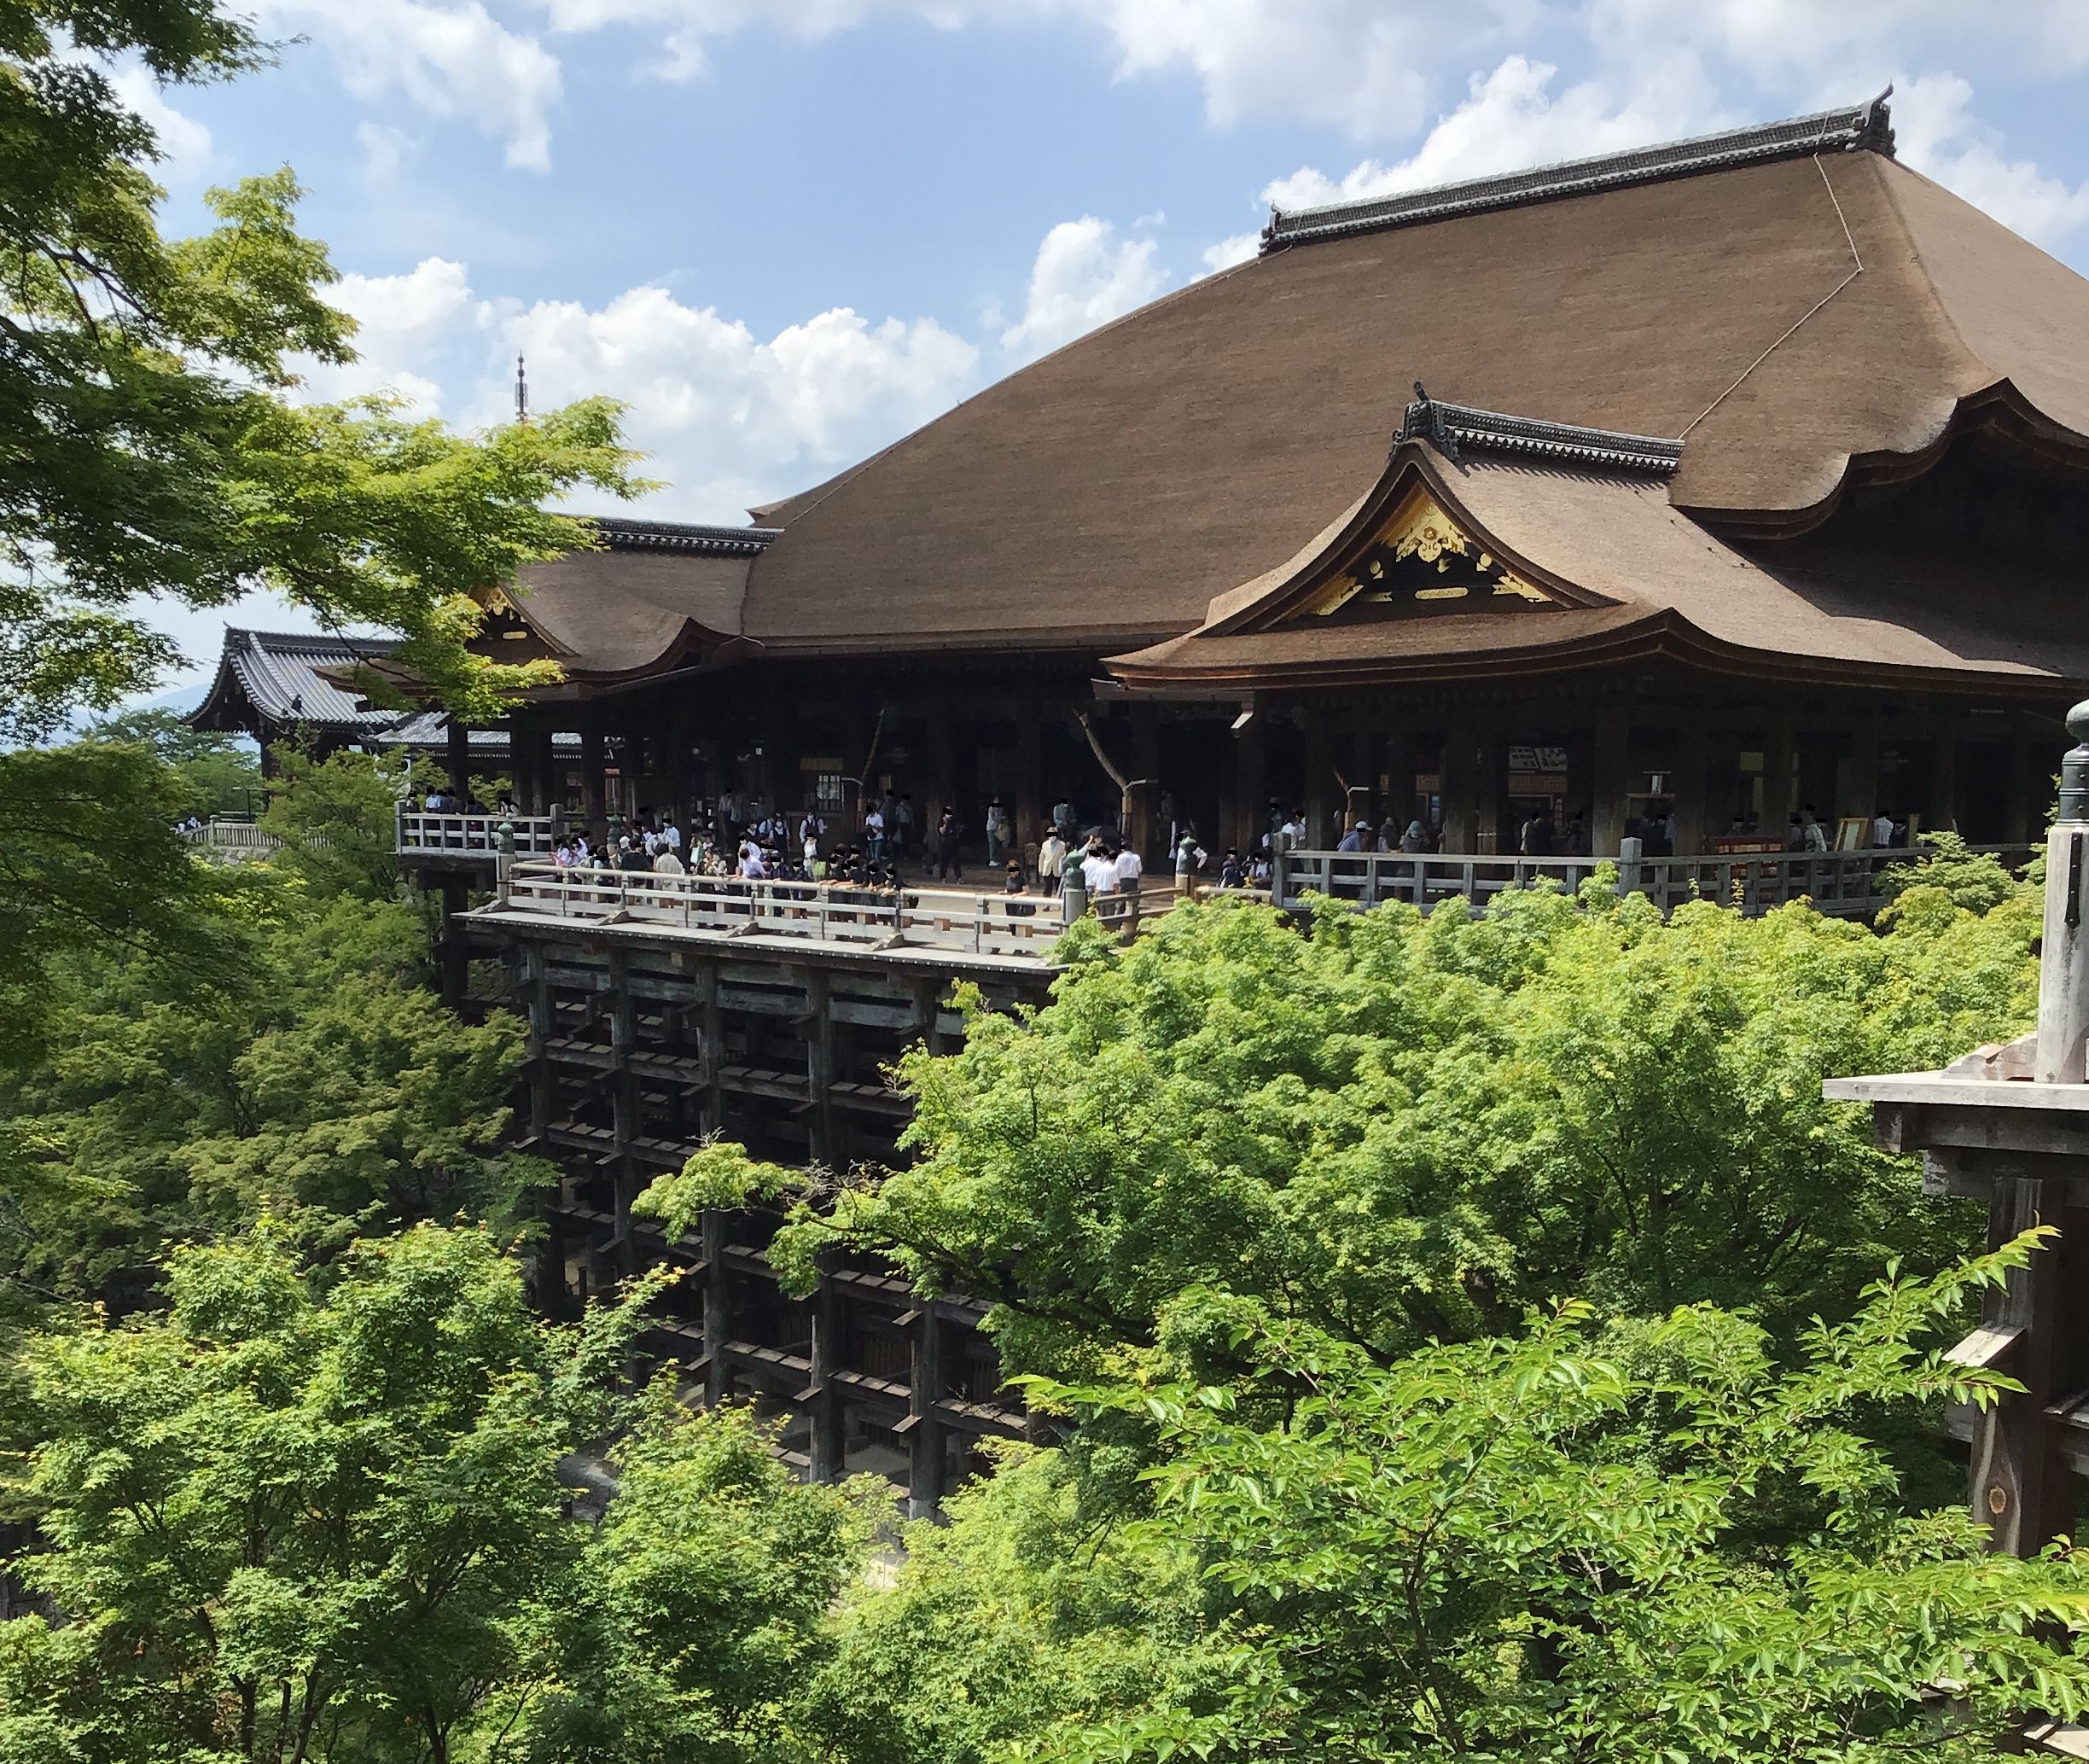 The main Kiyomizu Temple building